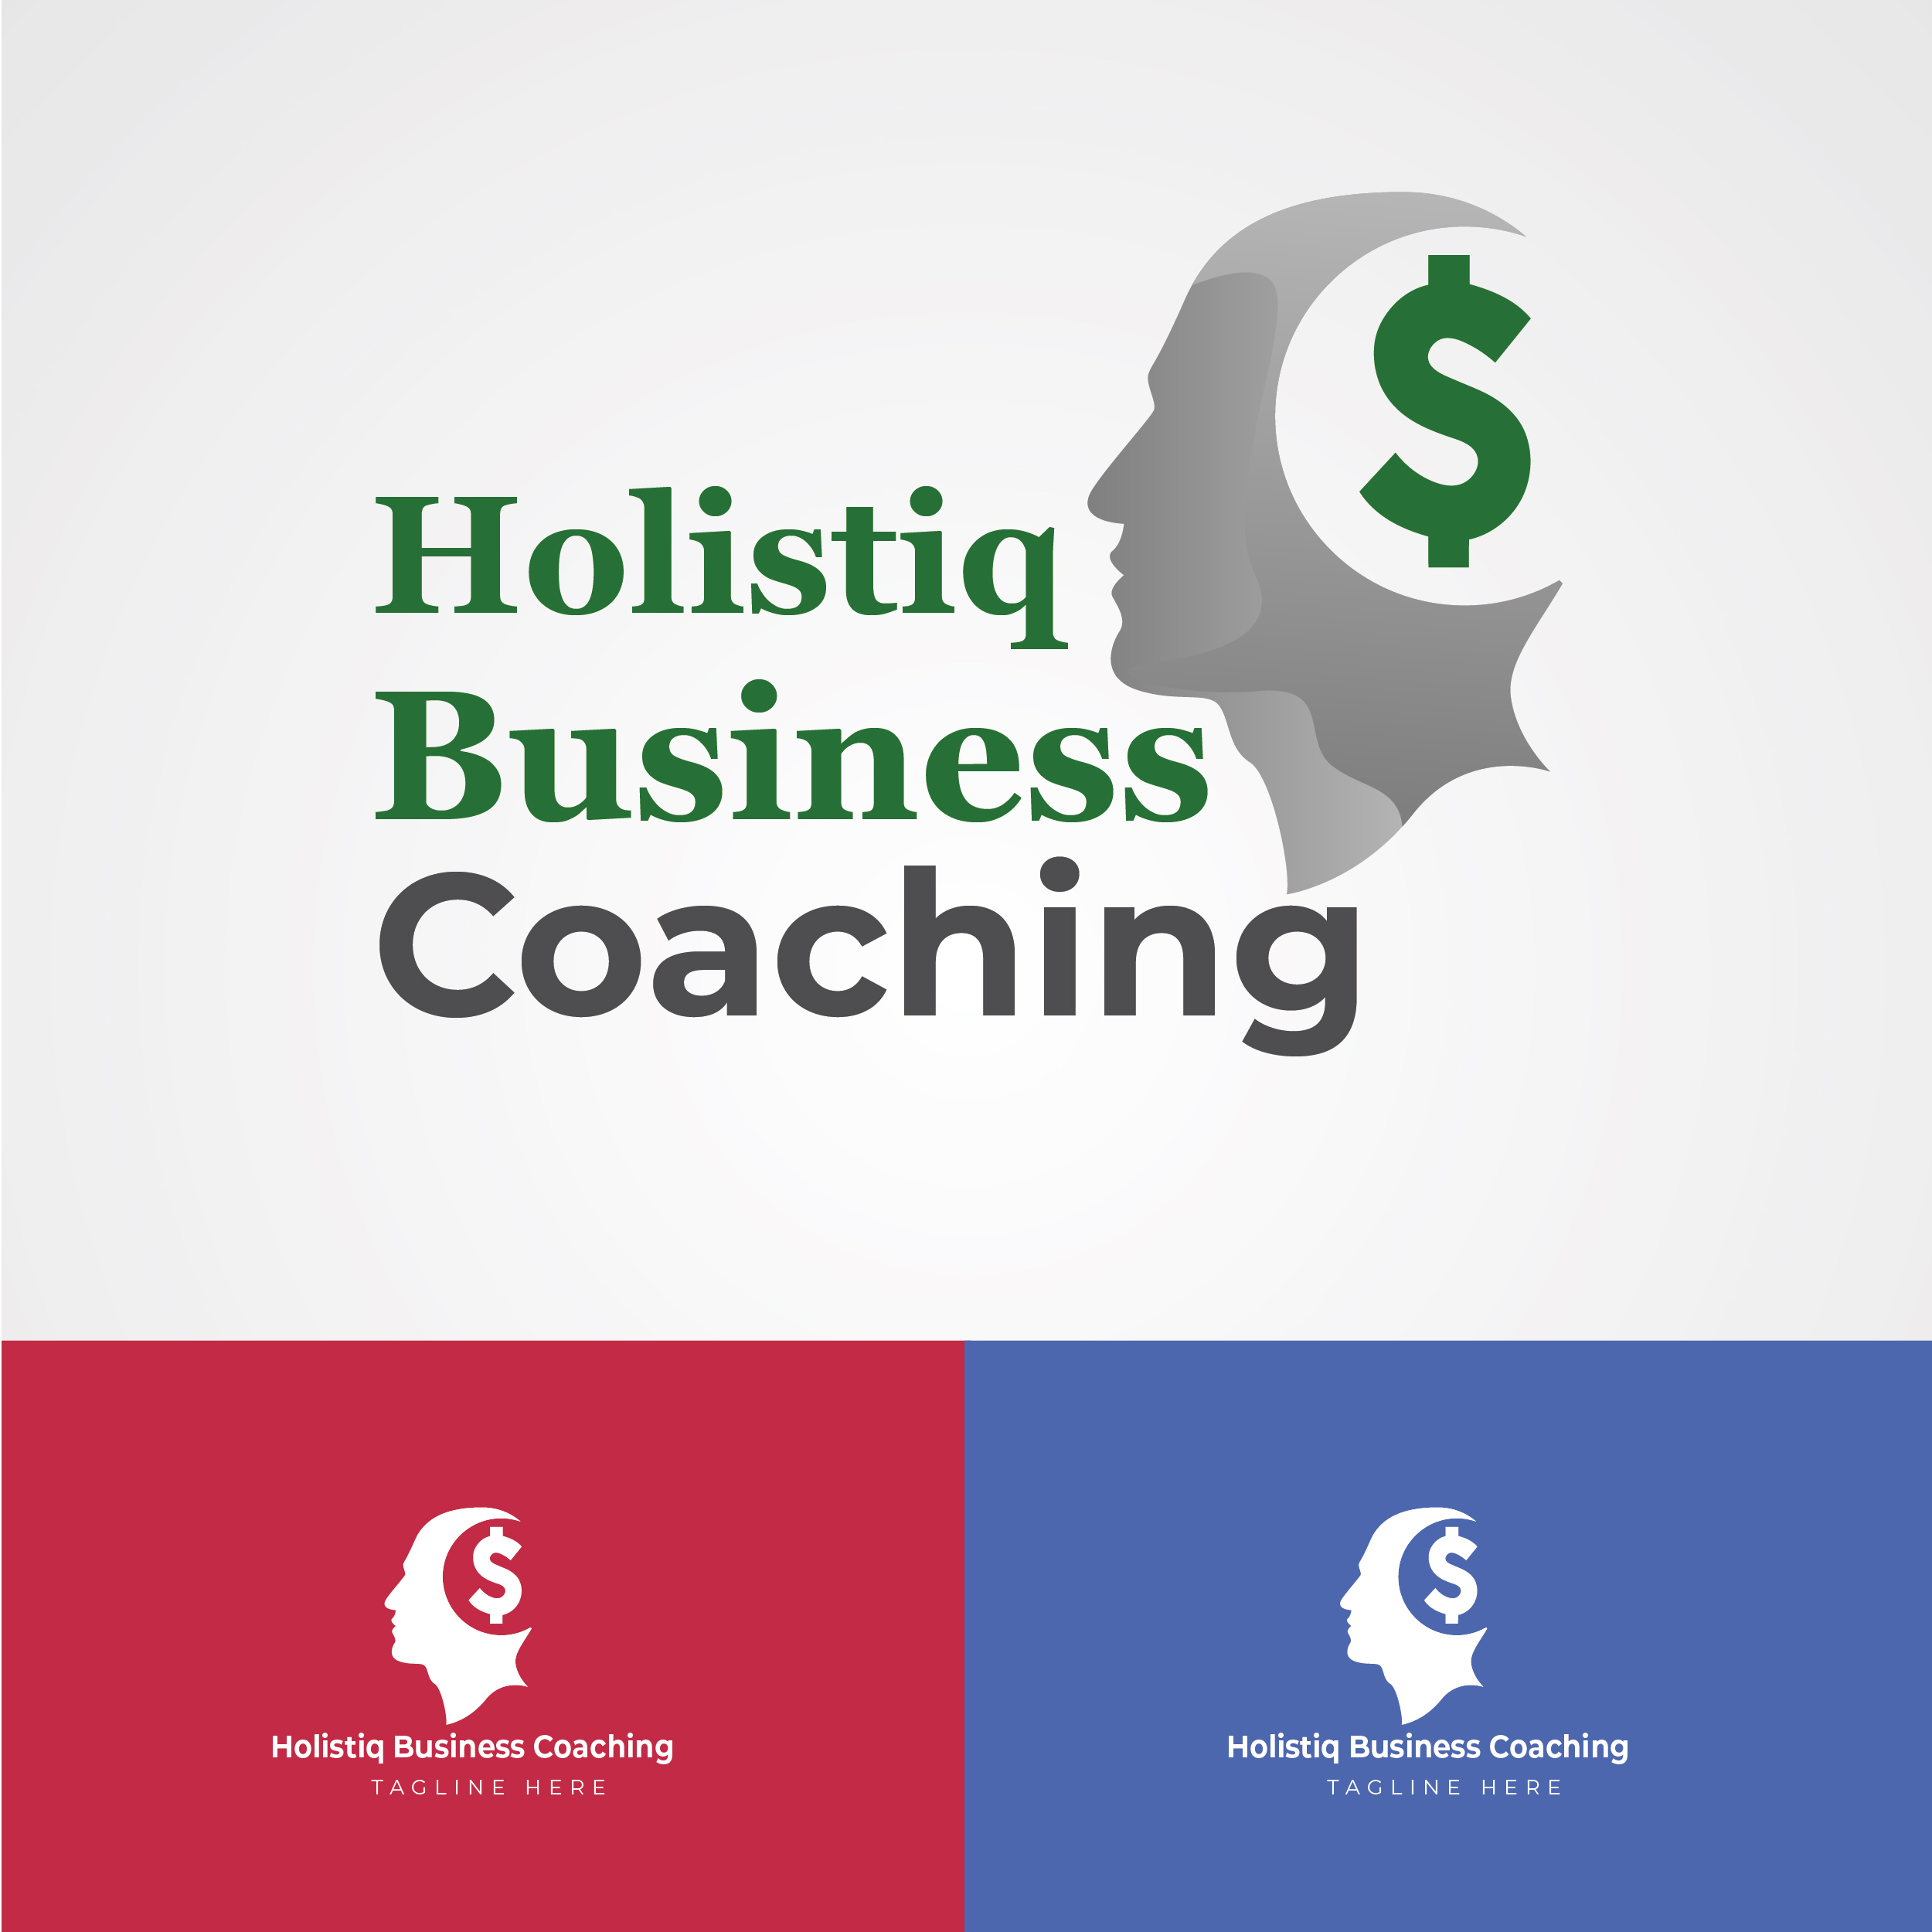 Holistiq Business Coaching pinterest preview image.